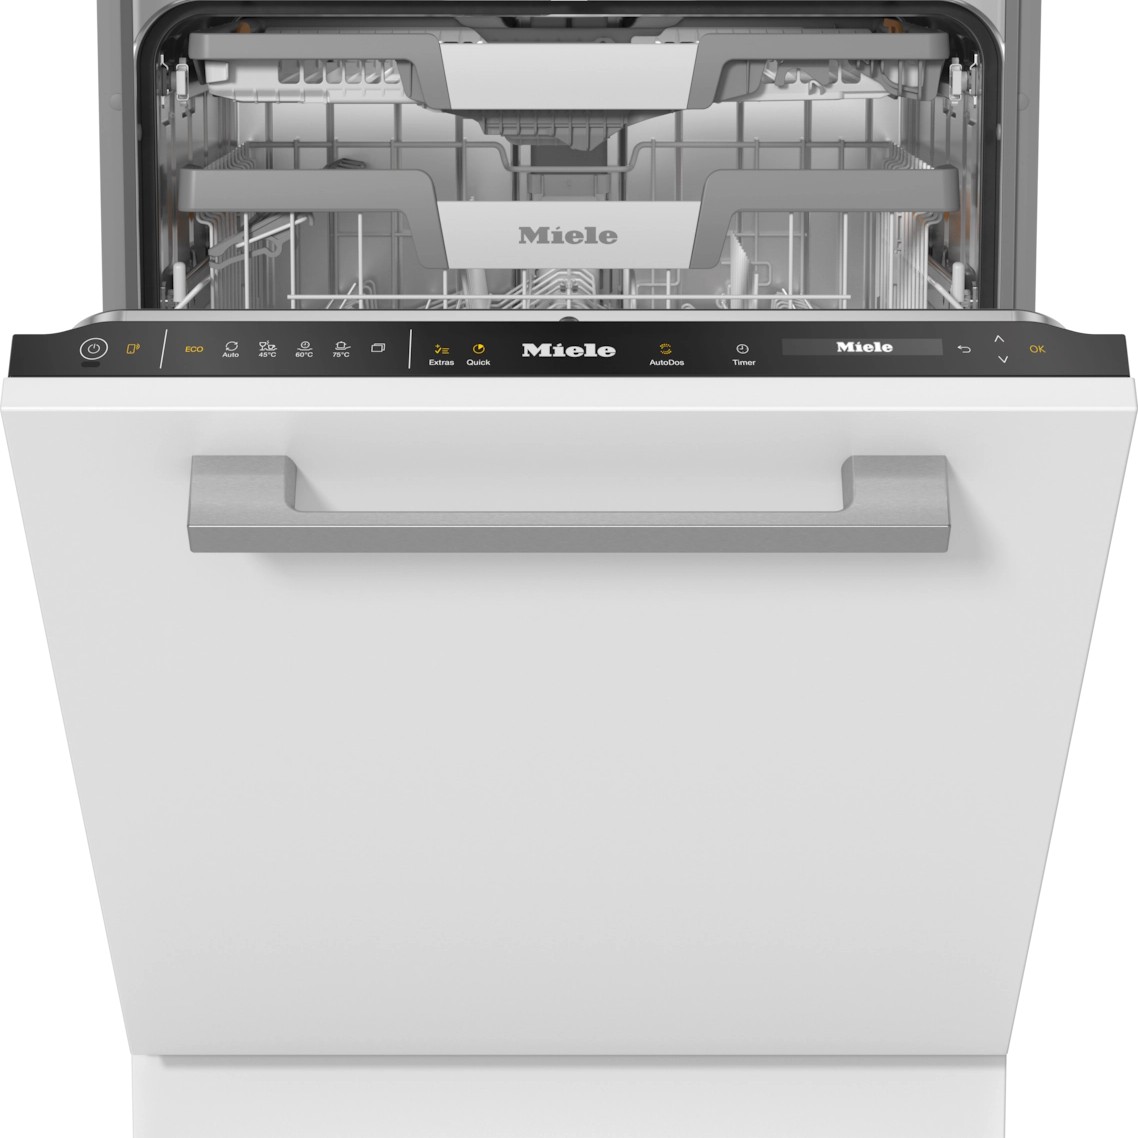 Встраиваемая посудомоечная машина Miele G 7650 SCVi встраиваемая посудомоечная машина miele g7110scu autodos